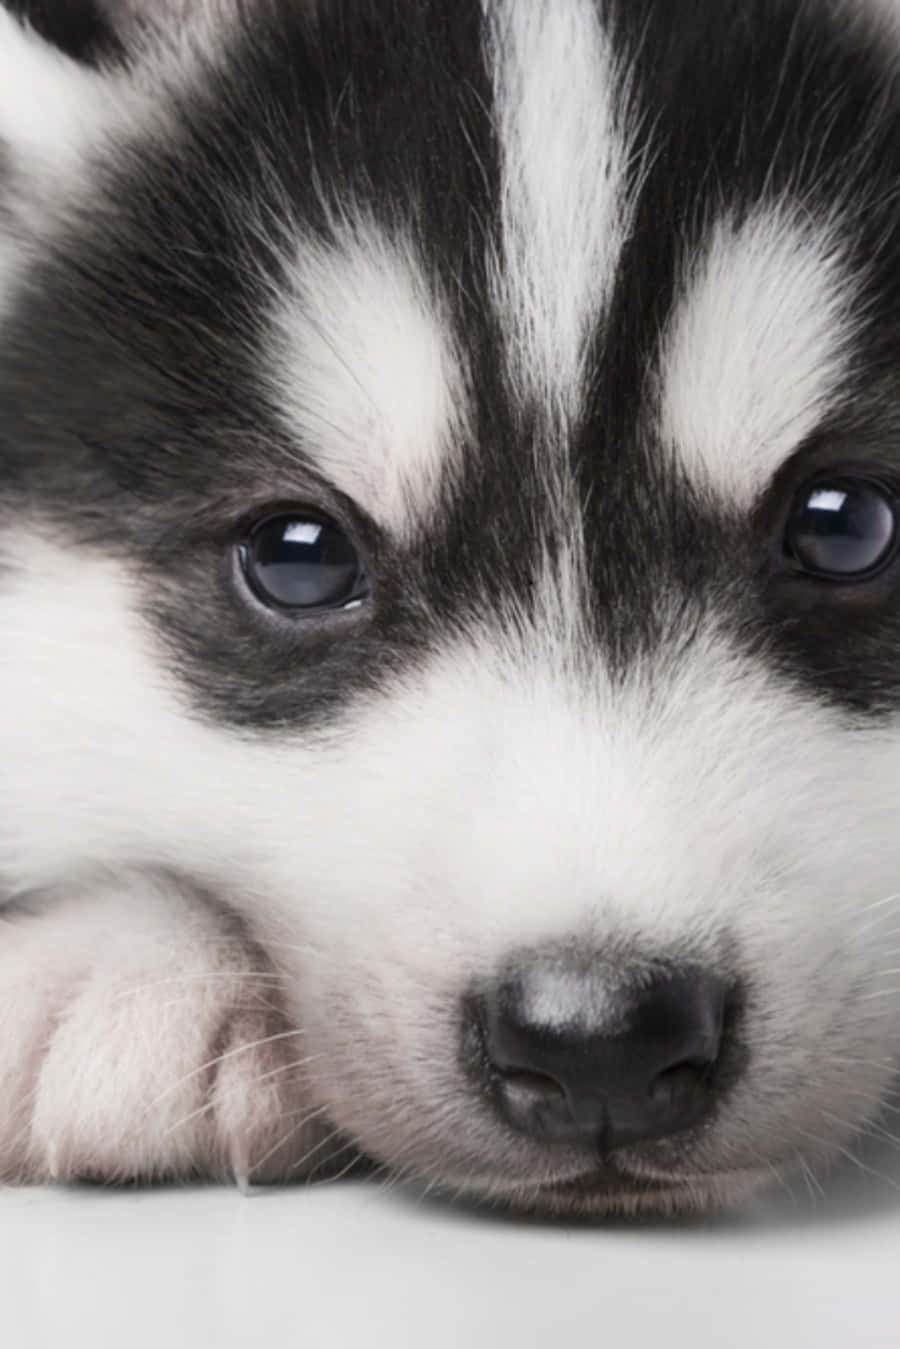 Cute Husky Puppy Close Up Face Picture